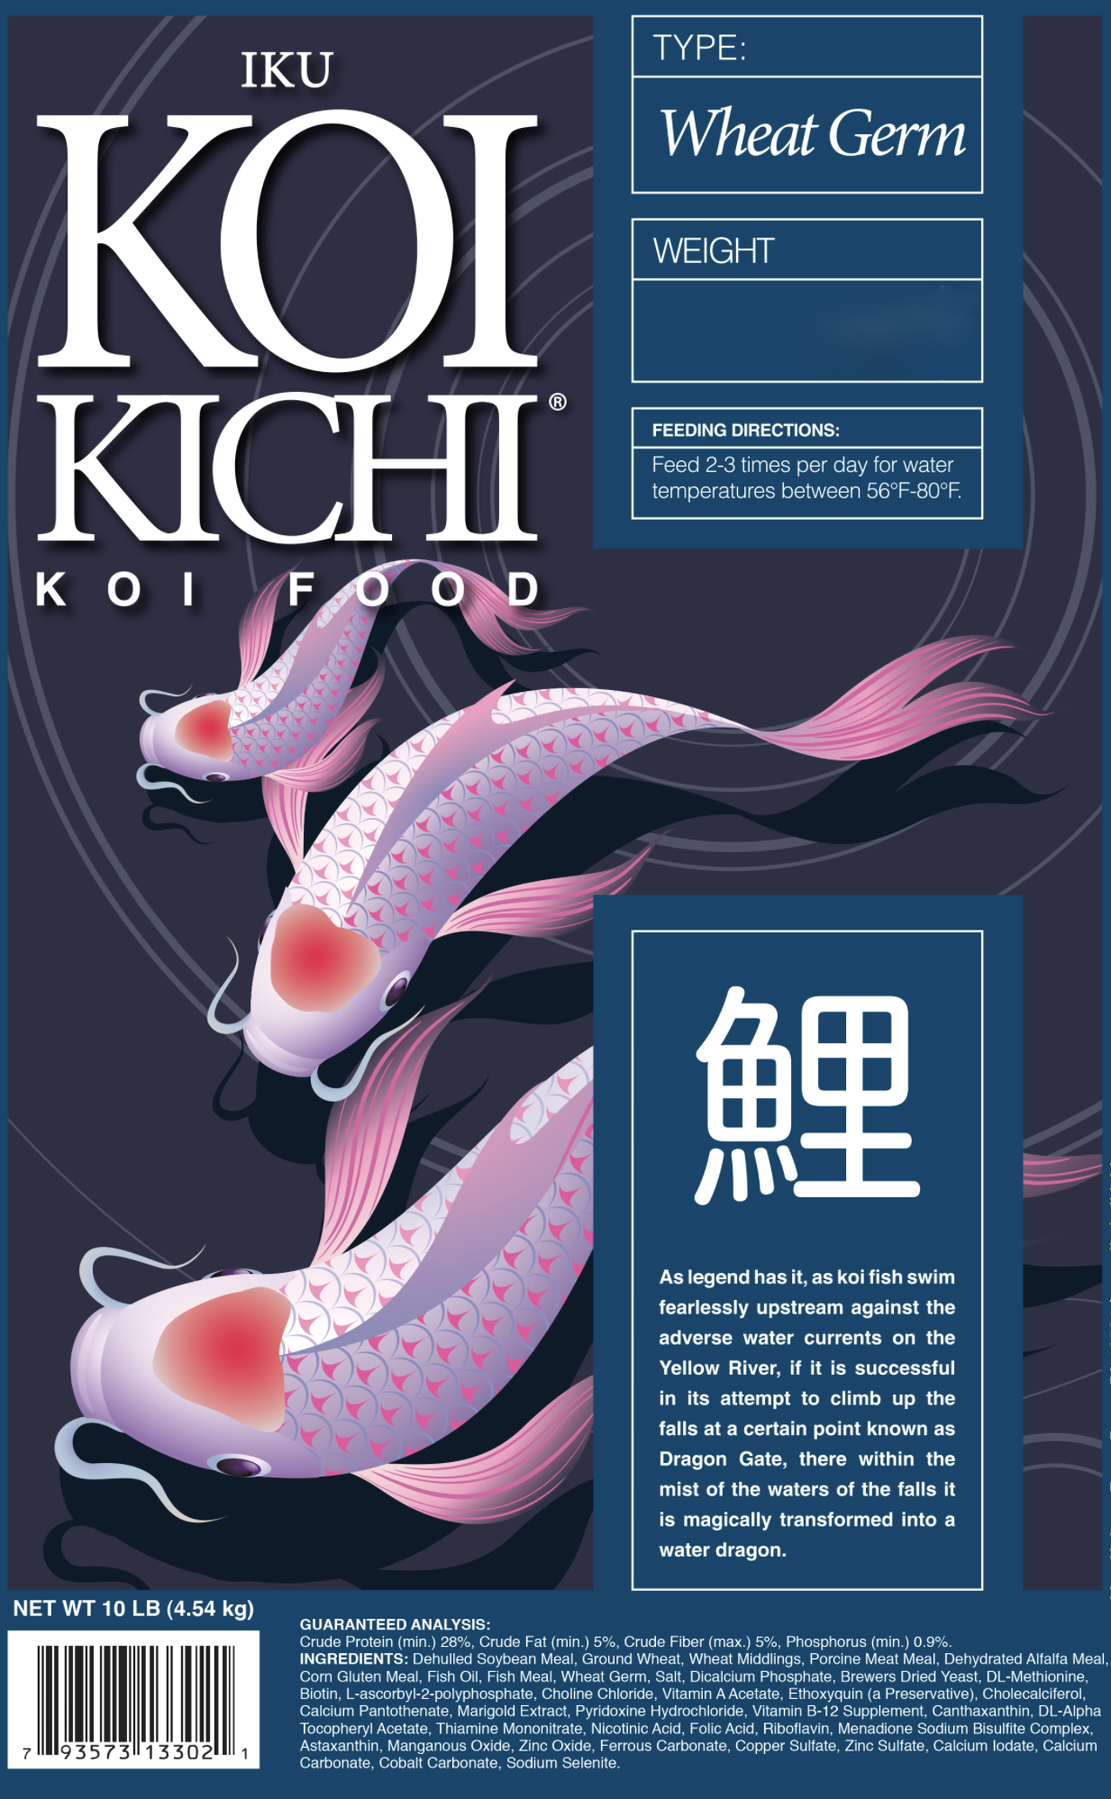 Iku Koi Kichi Wheat Germ Koi Fish Food - 2 lbs.